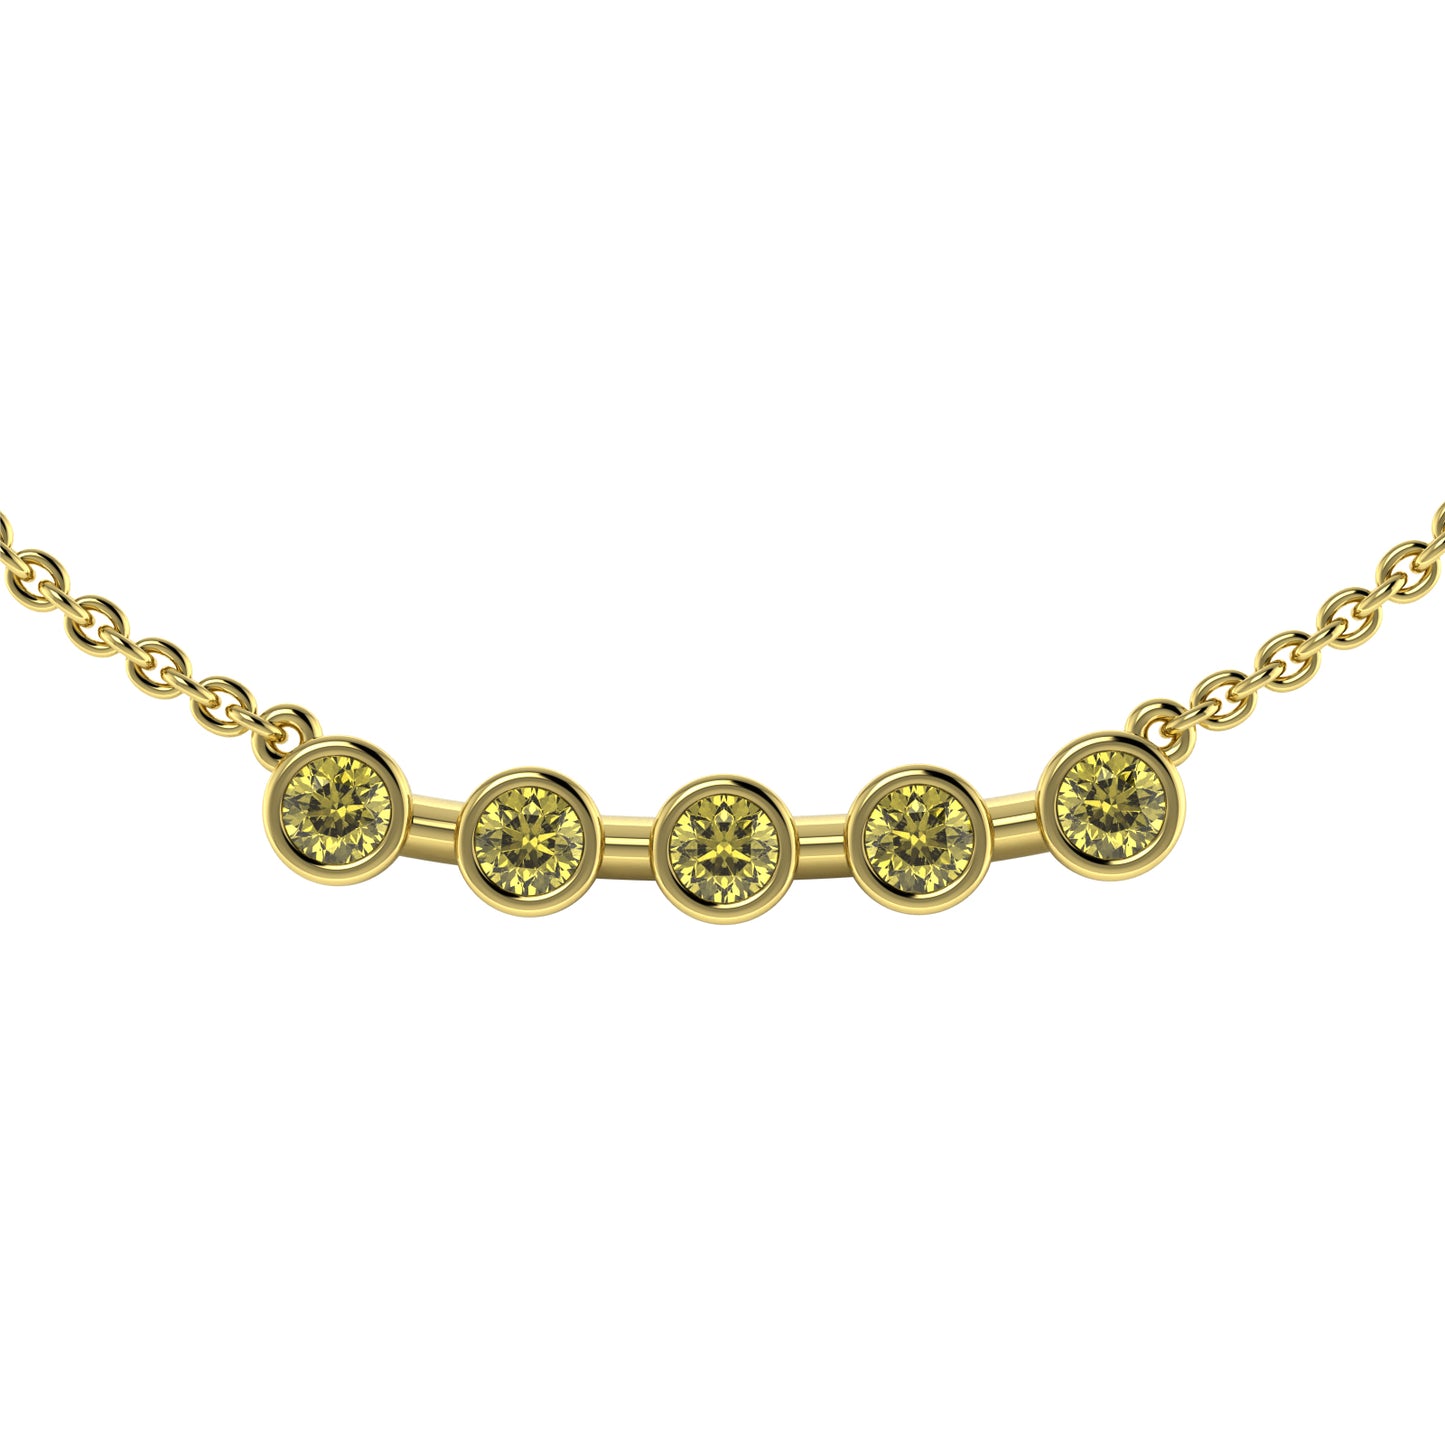 The 5 Rounds Sapphire Necklace - 18K / Platinum